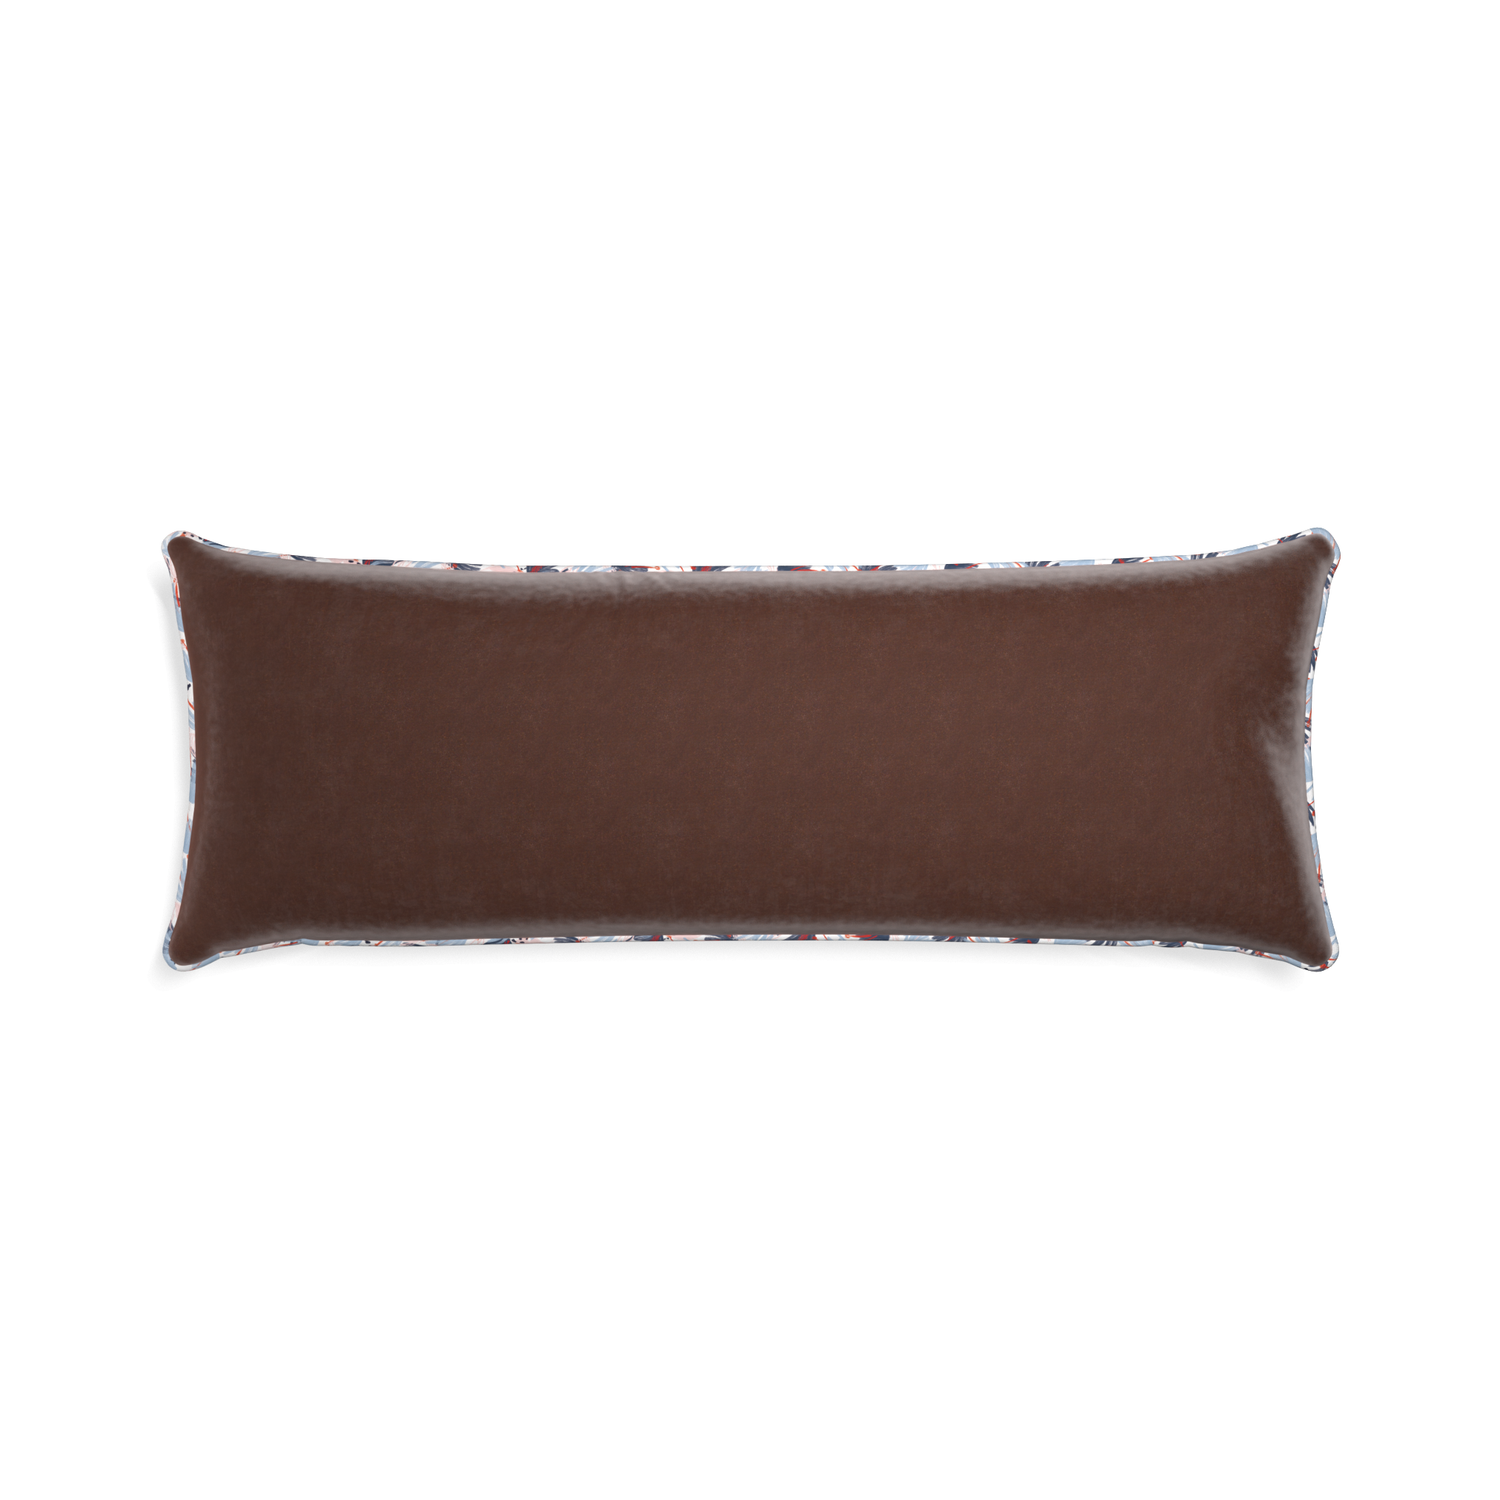 Xl-lumbar walnut velvet custom pillow with e piping on white background